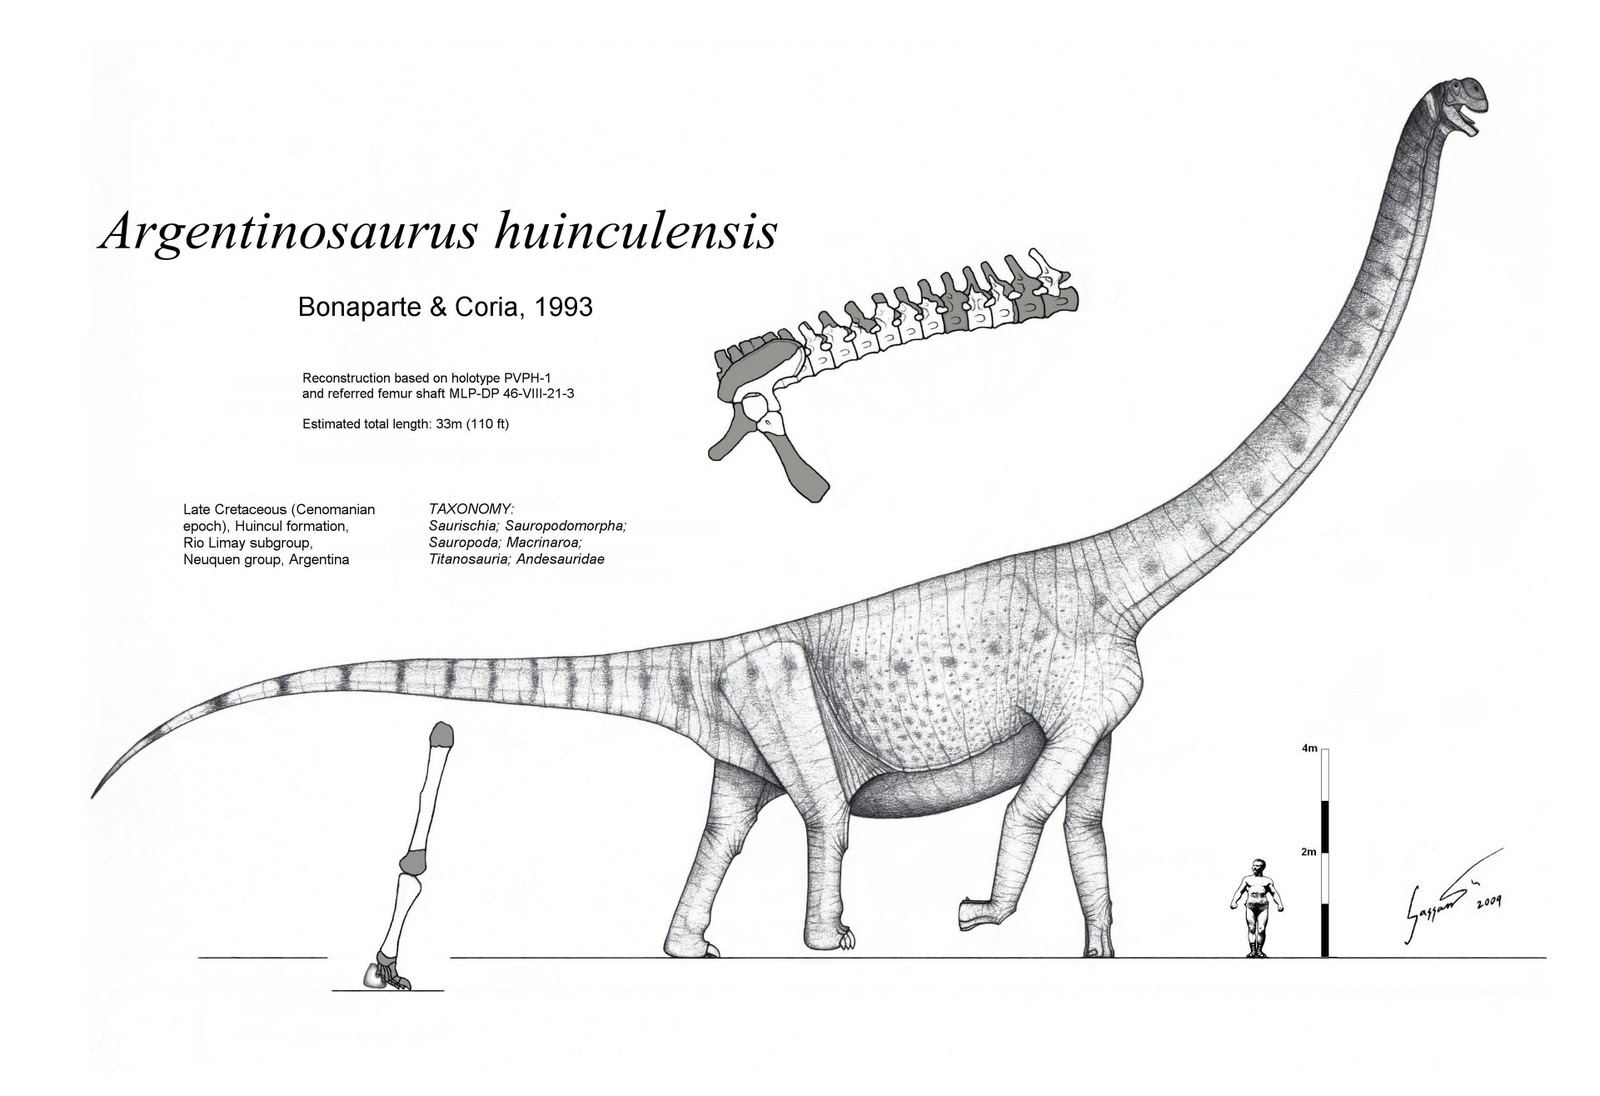 Argentinosaurus huinculensis